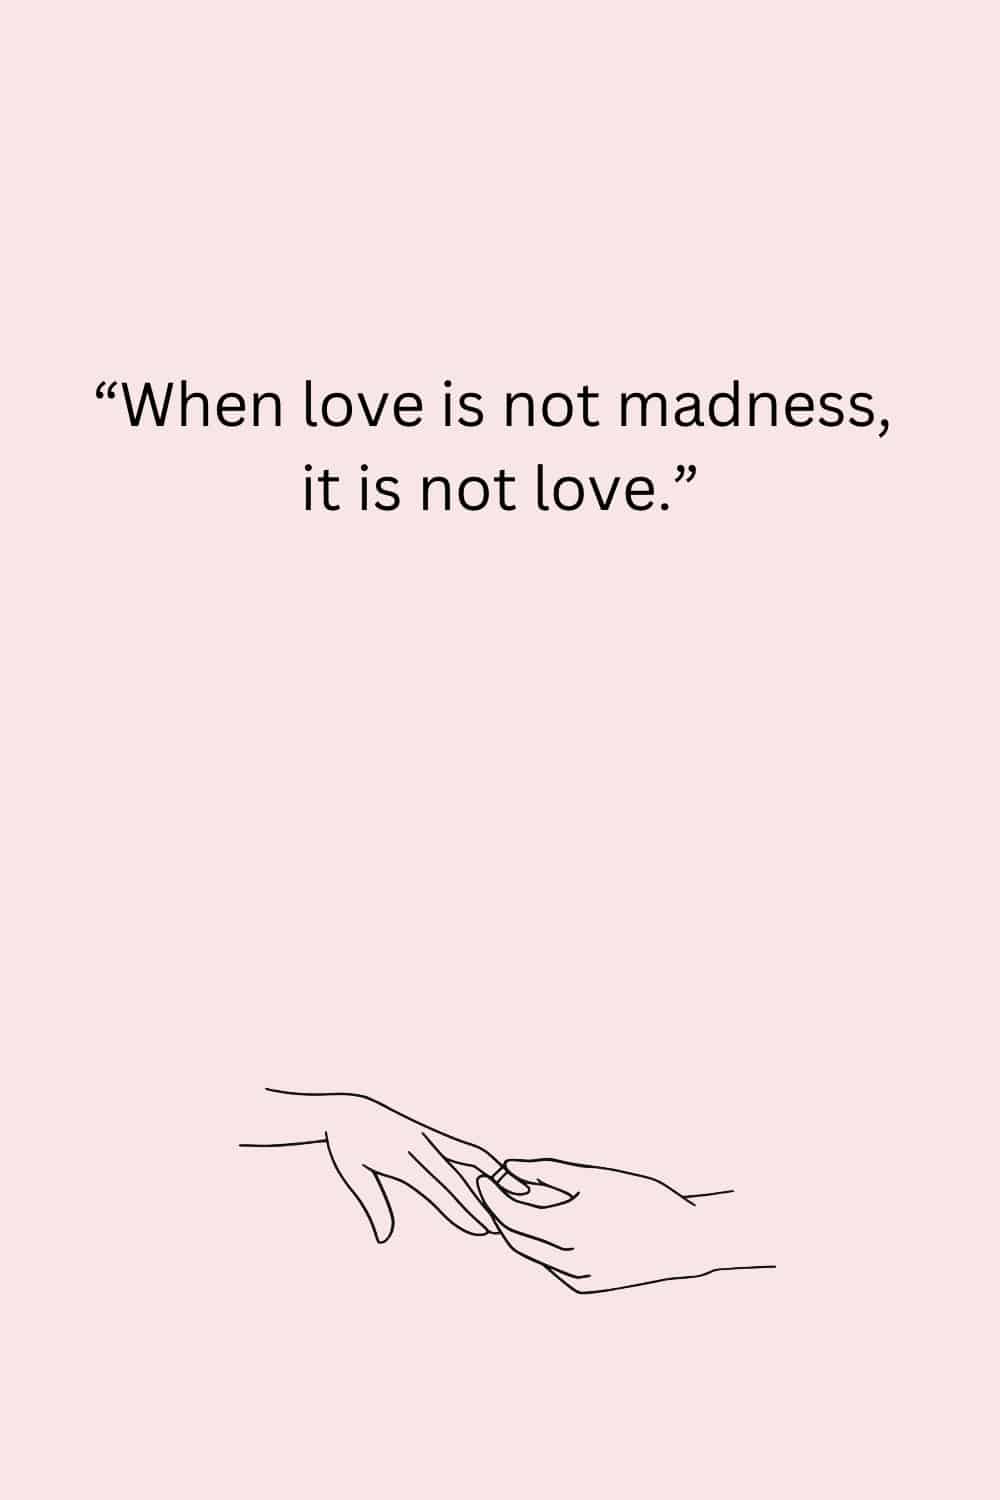 “When love is not madness, it is not love.” – Pedro Calderon de la Barca